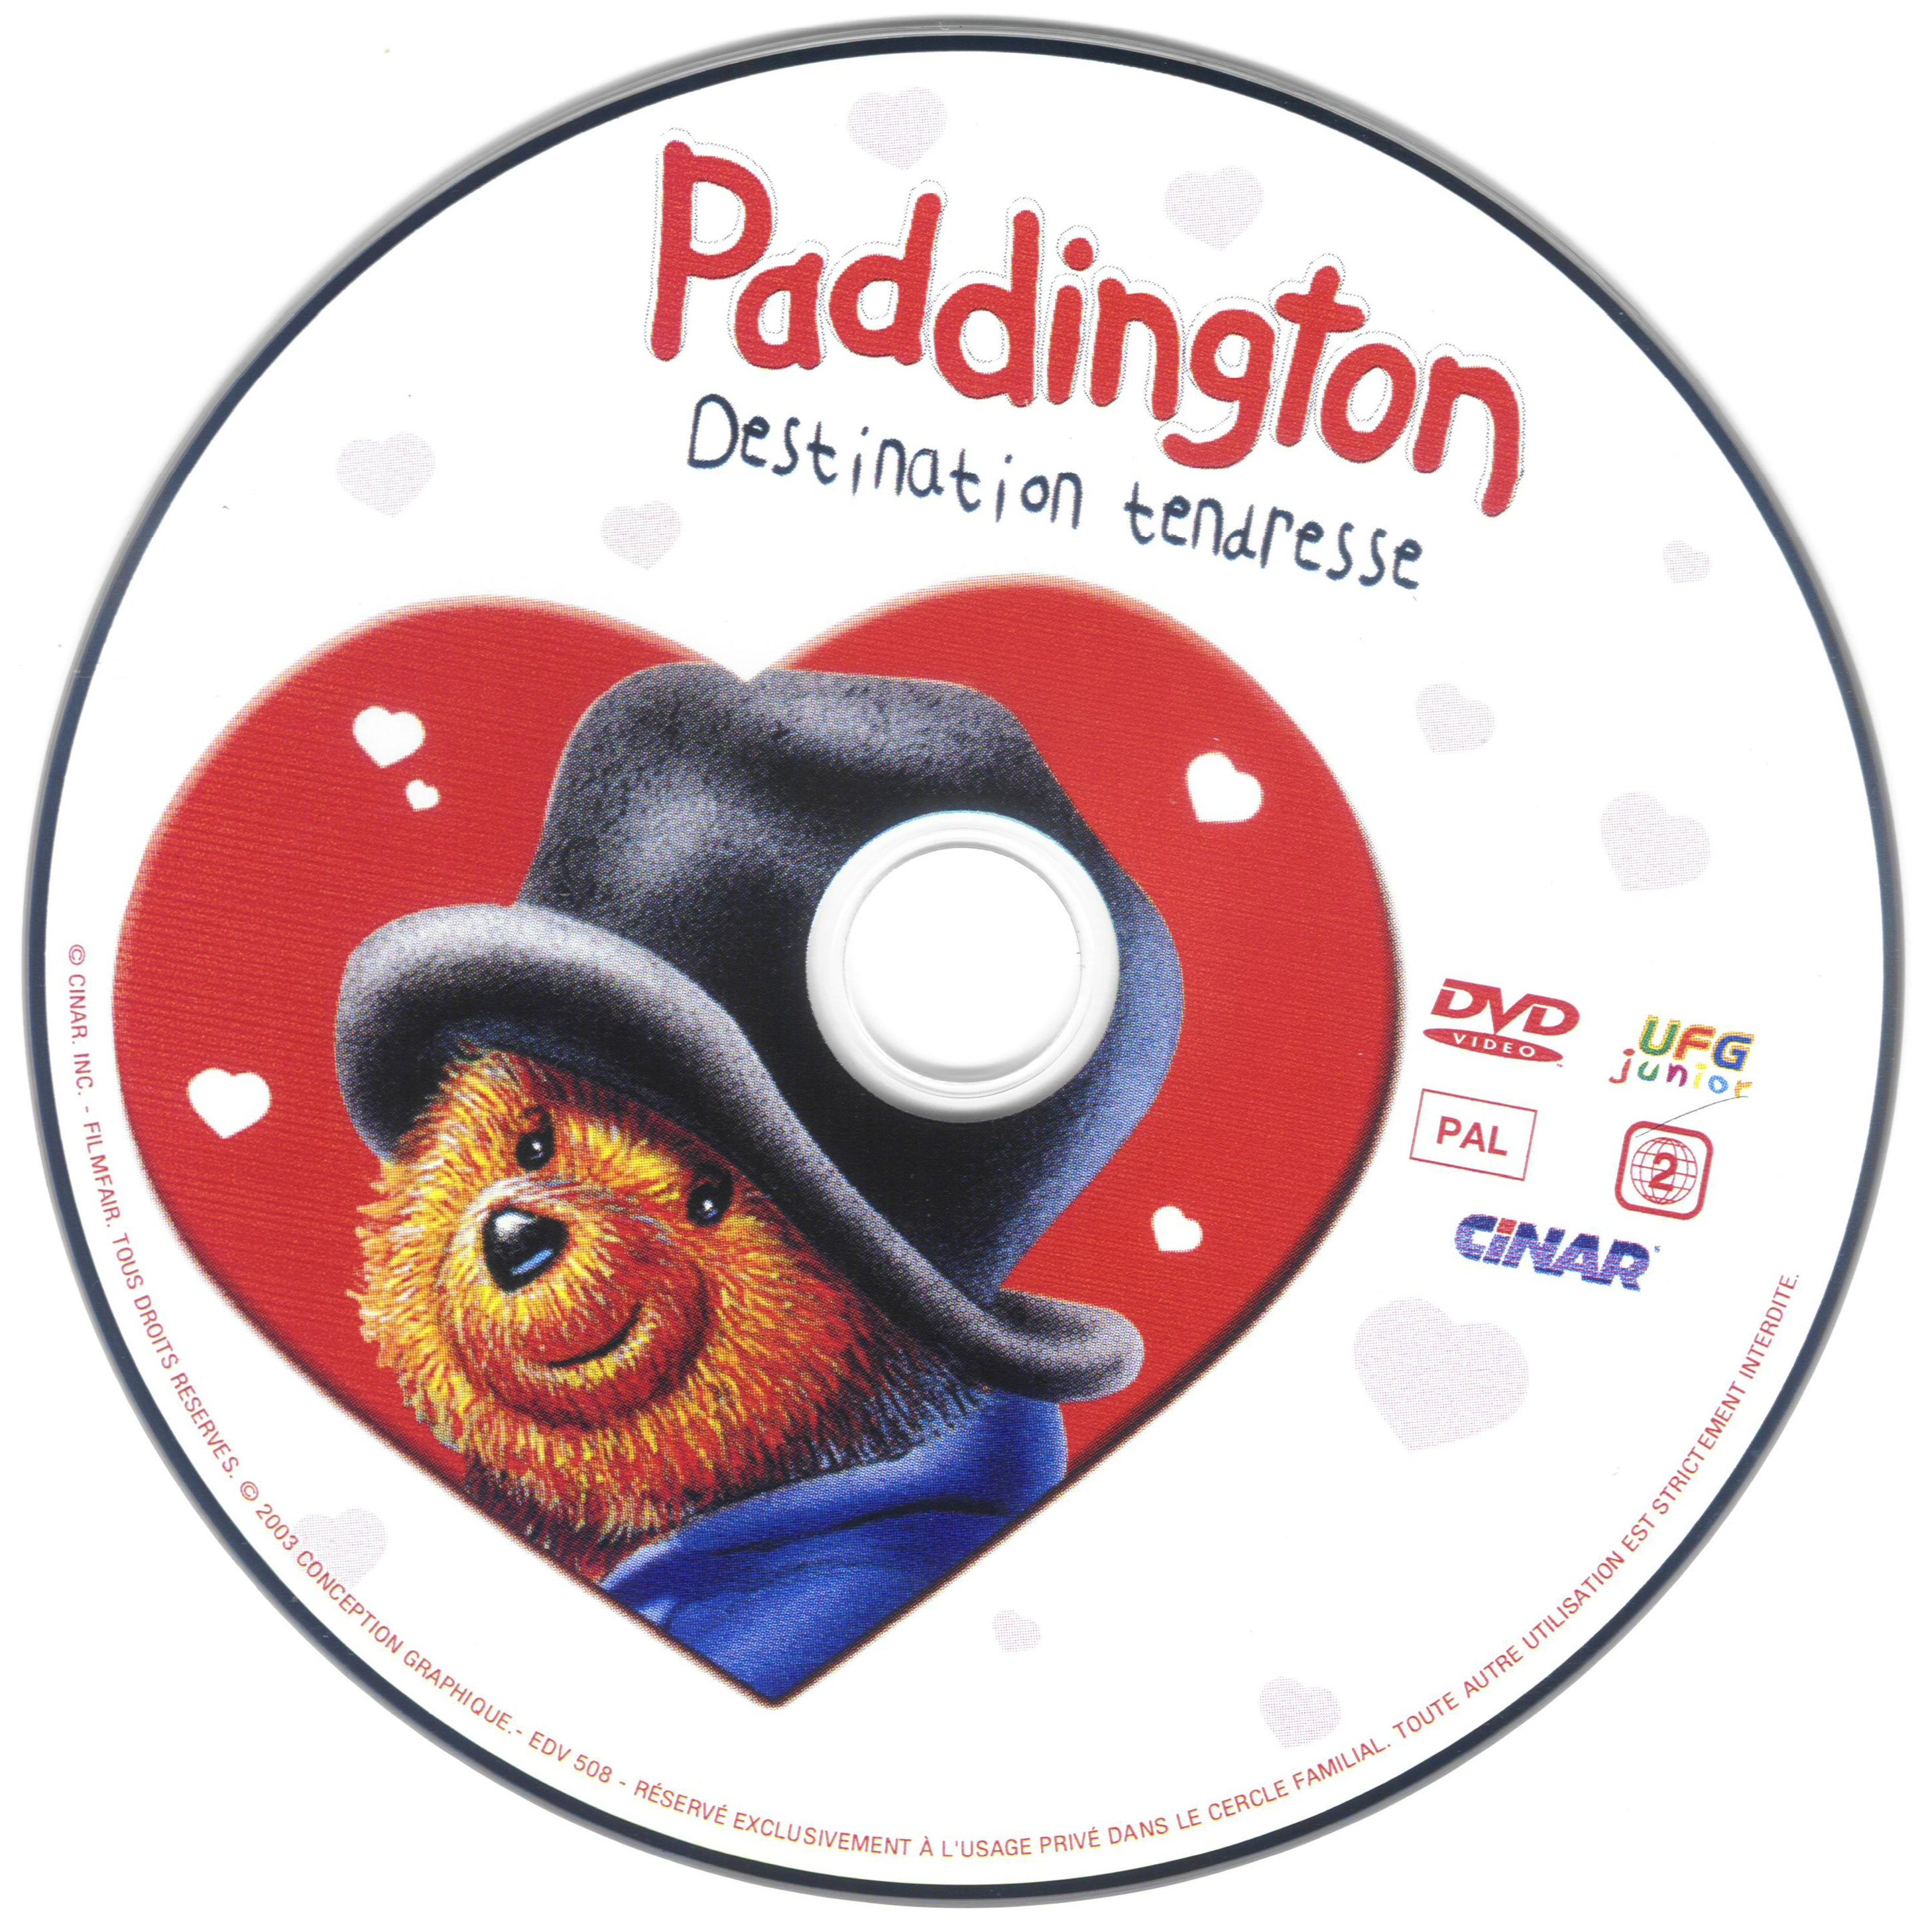 Paddington - Destination tendresse